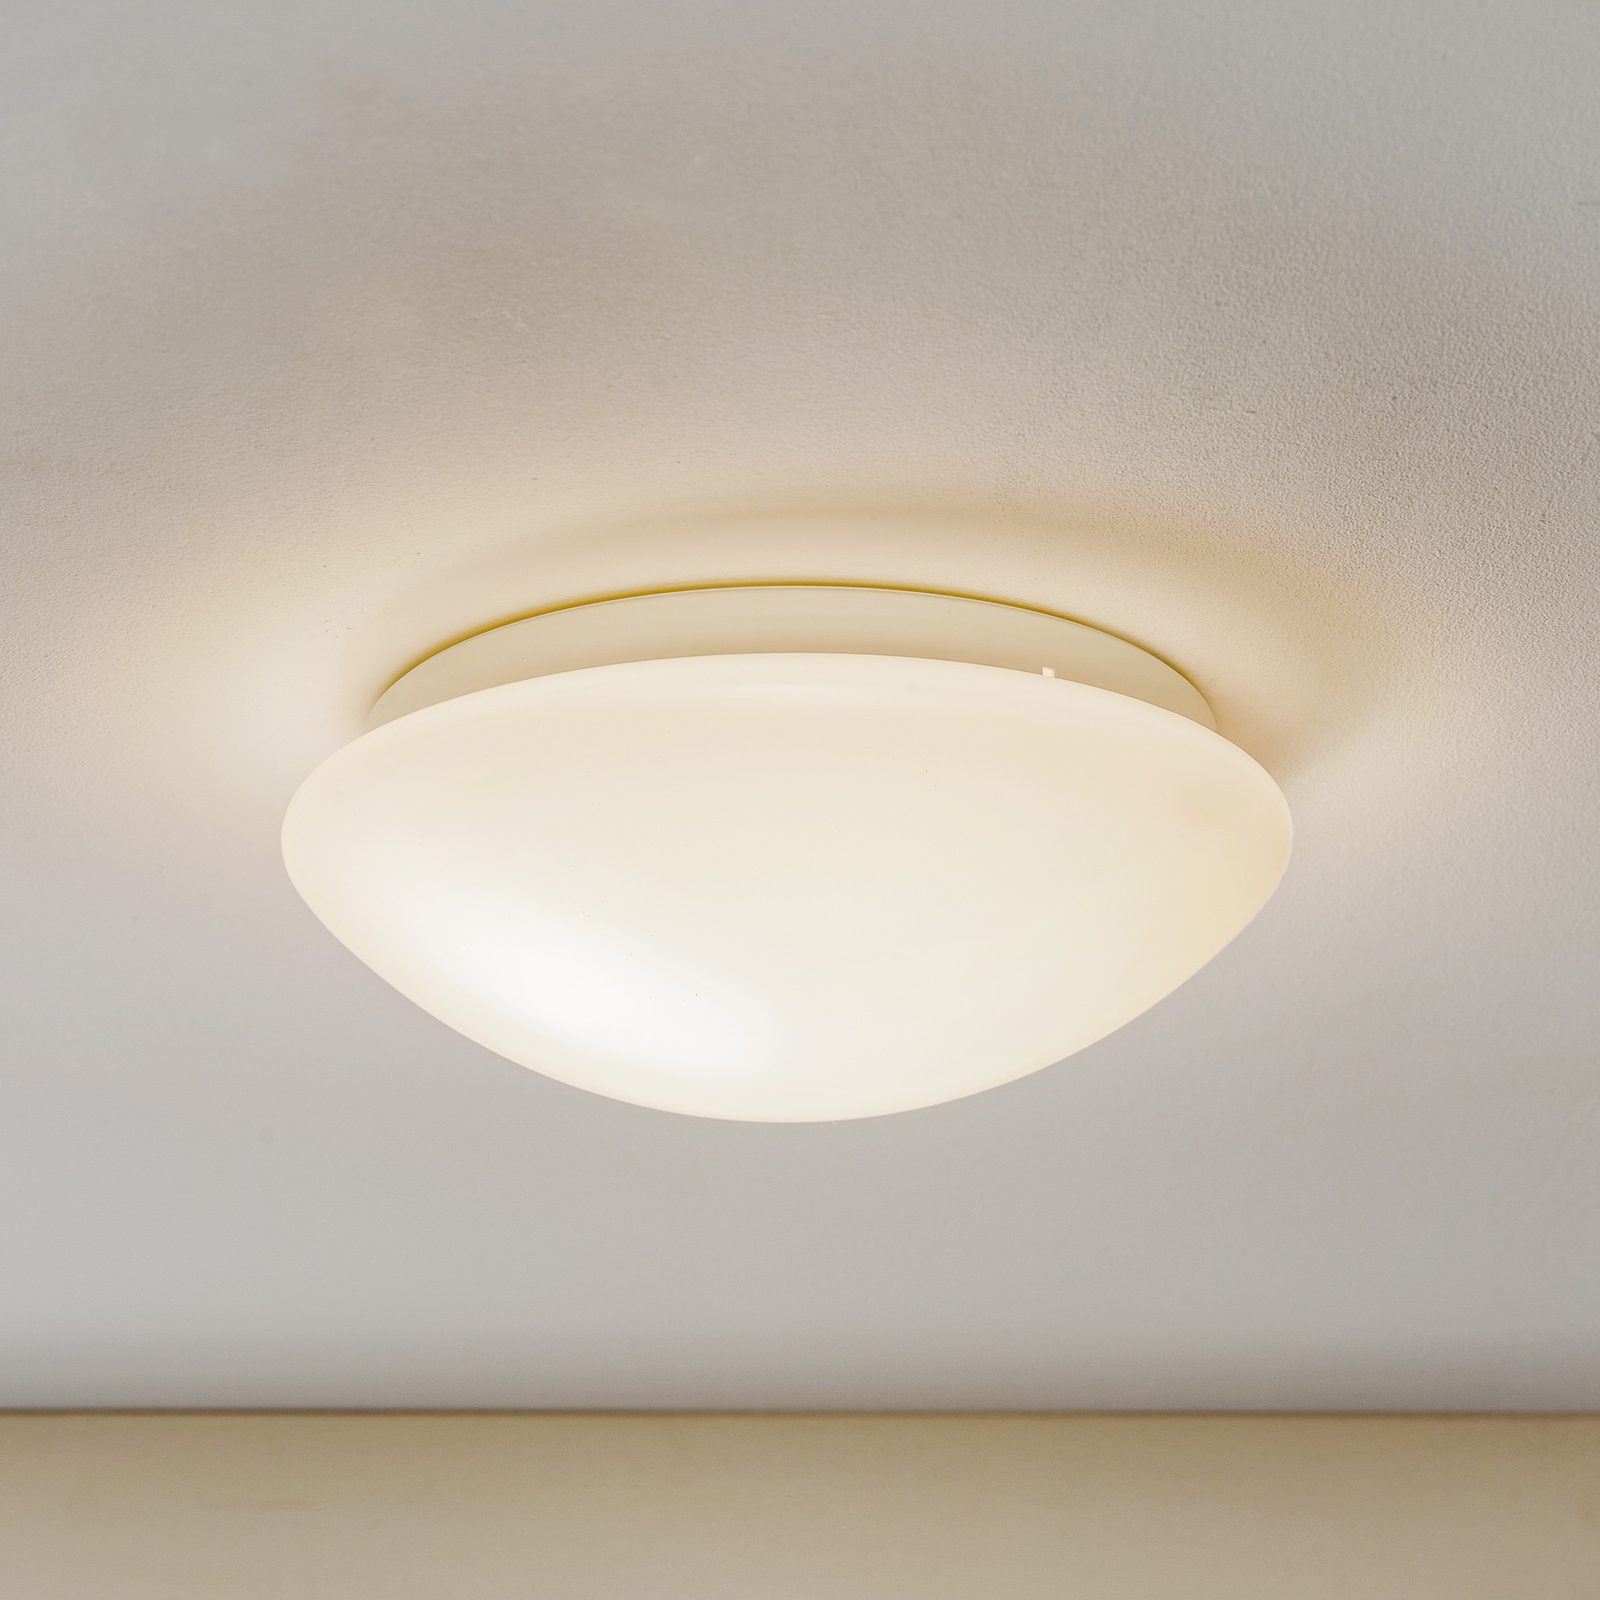 PRO P1 S plafondlamp | Lampen24.be